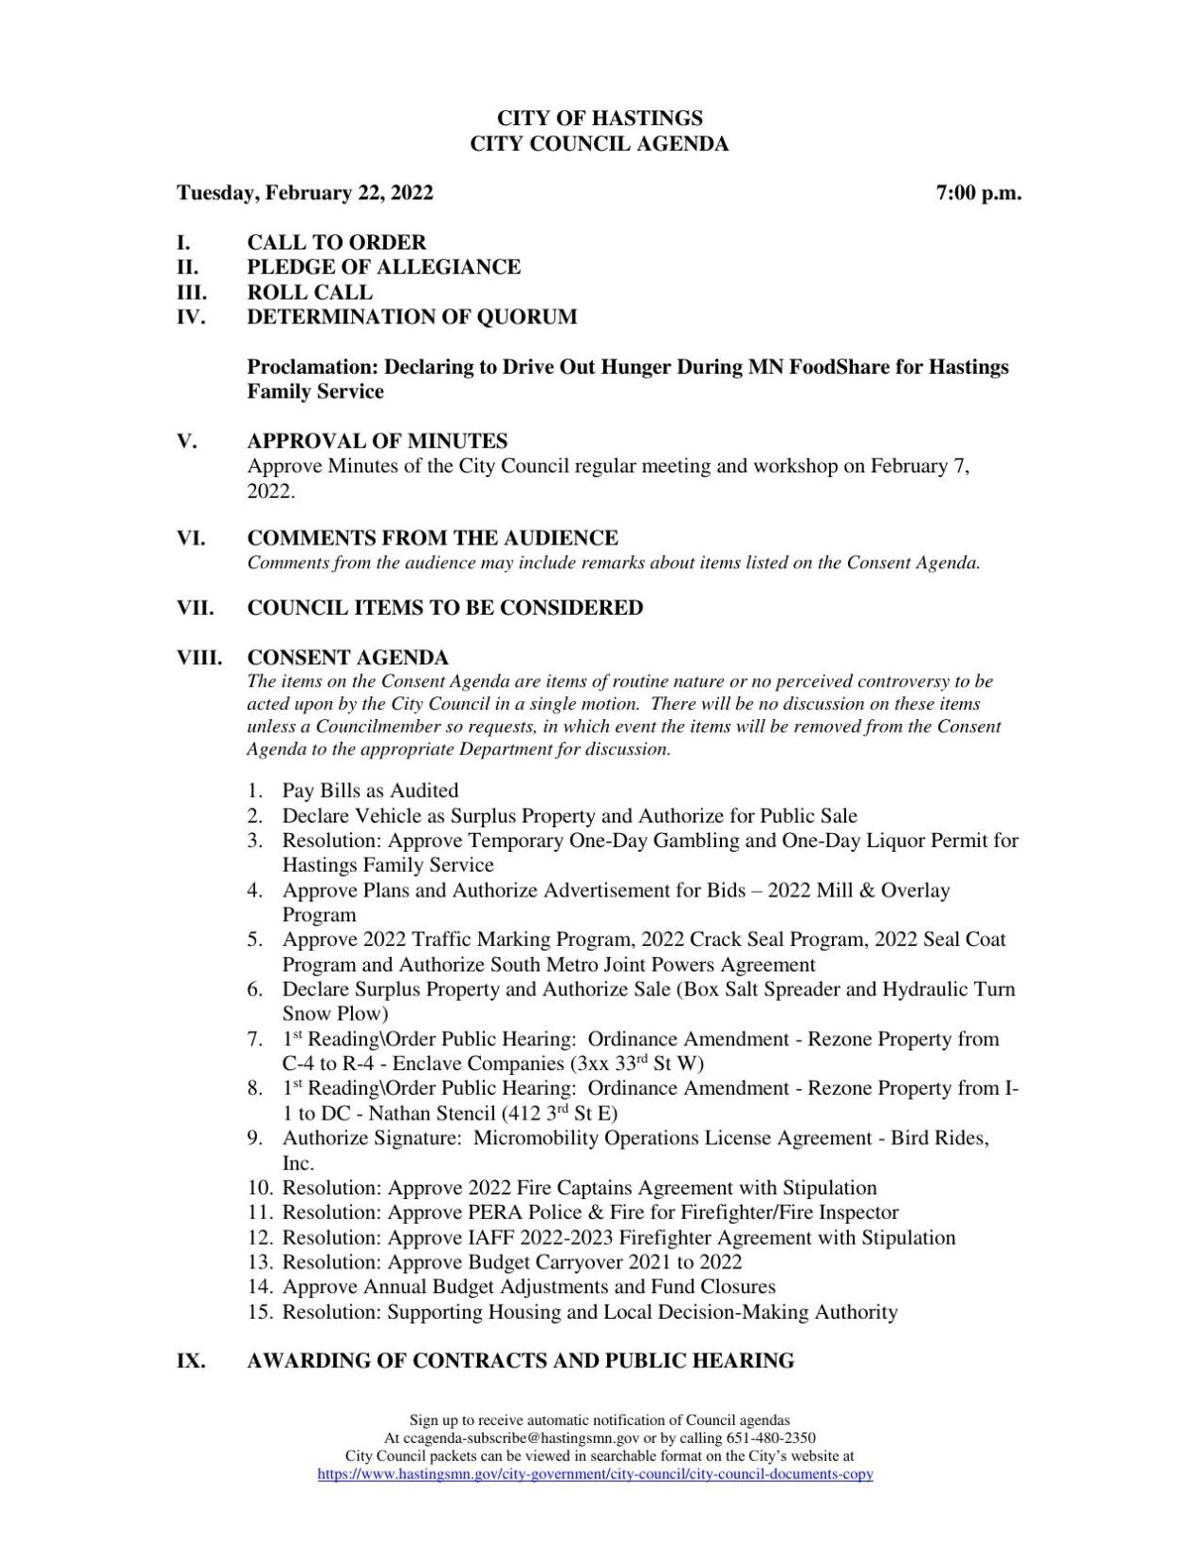 Feb 22 City Council Agenda